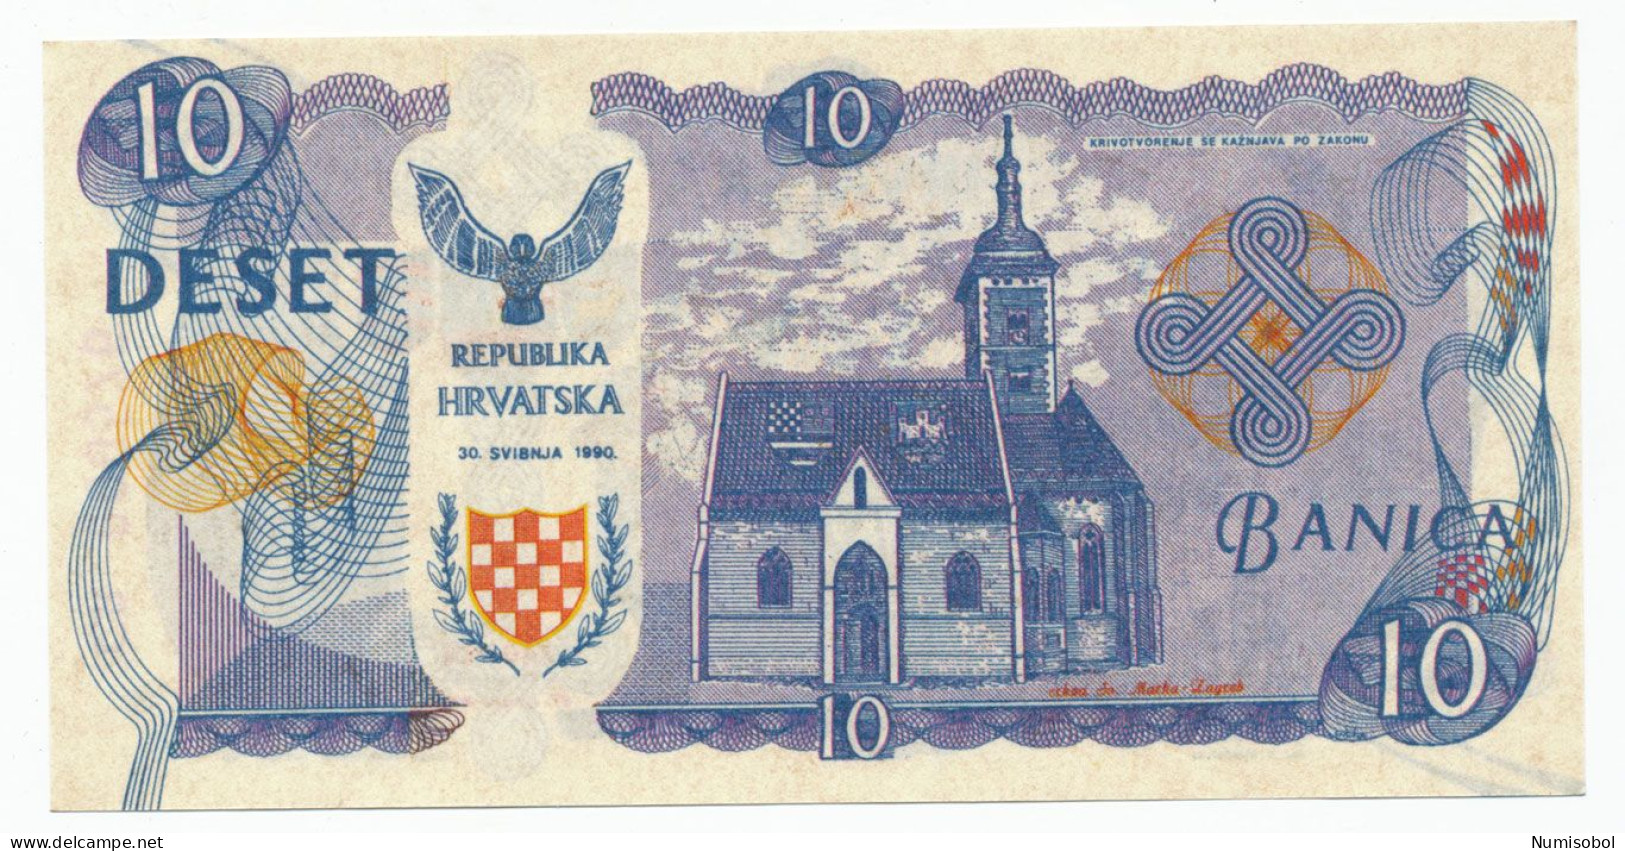 CROATIA, HRVATSKA - 10 Banica Proposal Propaganda Banknote 1991, UNC. (C022) - Croatia